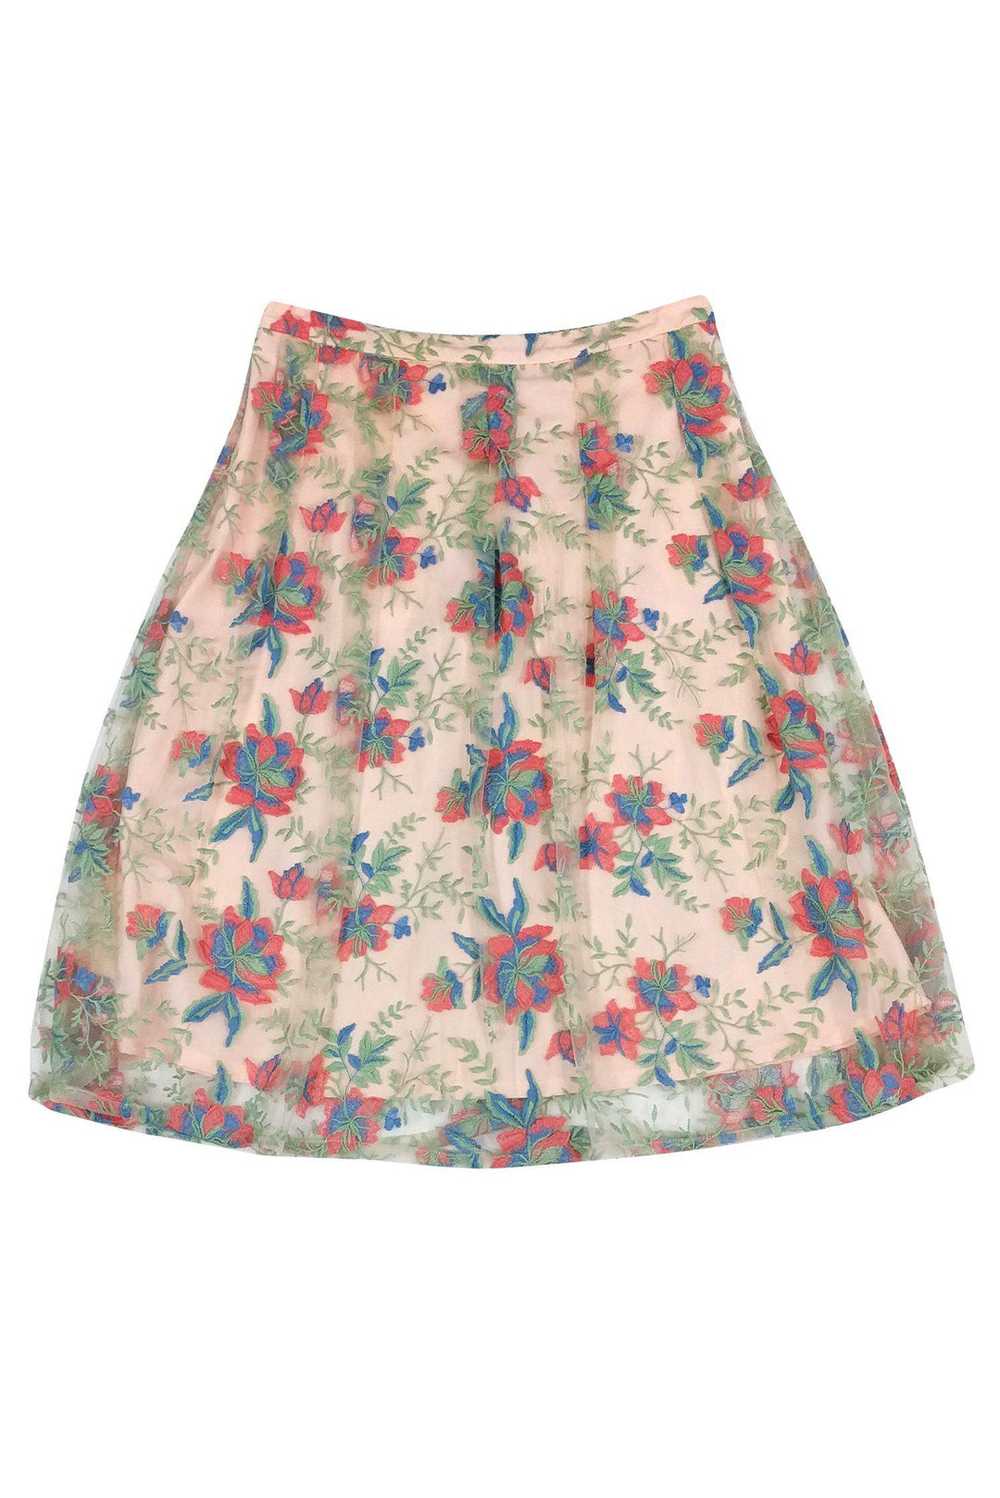 Nanette Lepore - Pink Mesh Embroidered Skirt Sz 4 - image 1